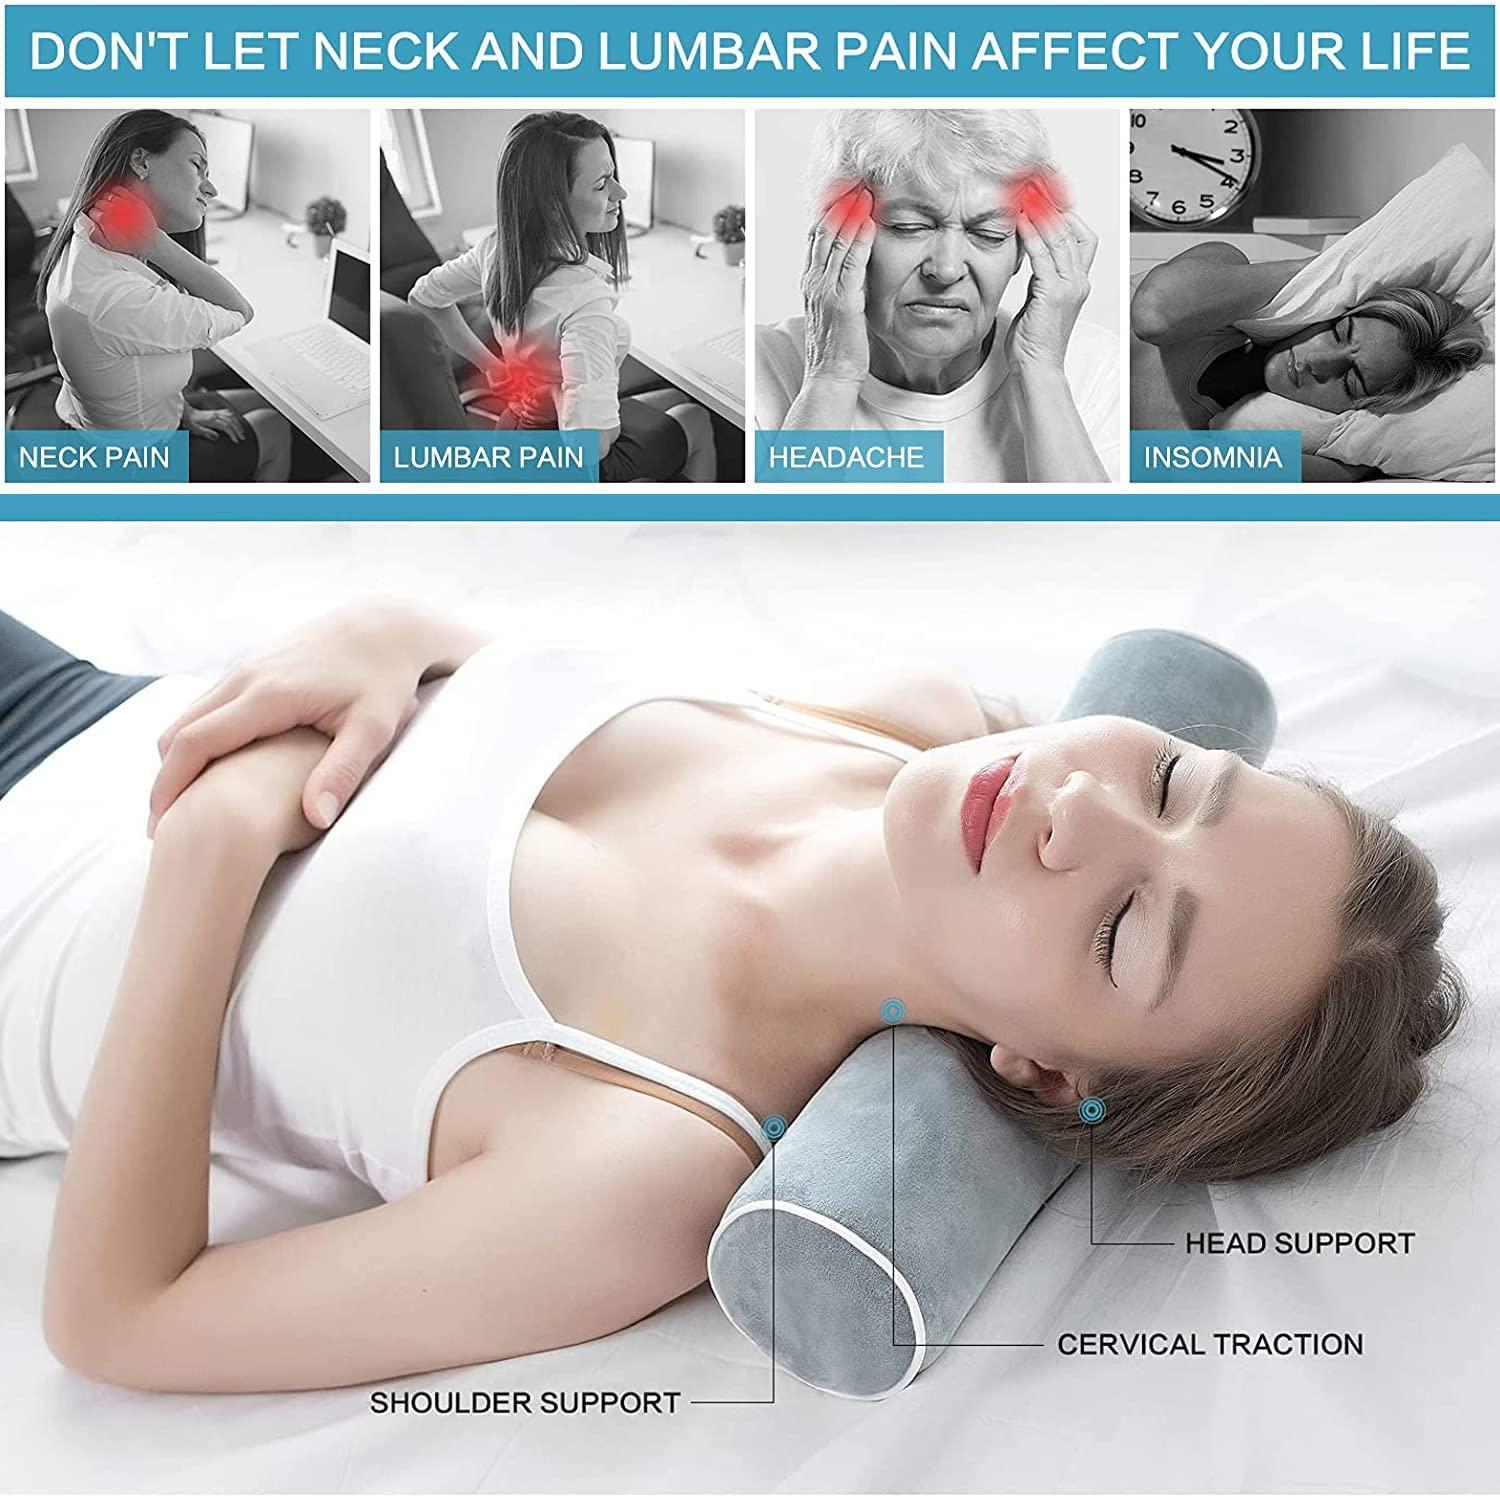 ZHCHG Cervical Neck Roll Pillow- Memory Foam Cylinder Pillow for